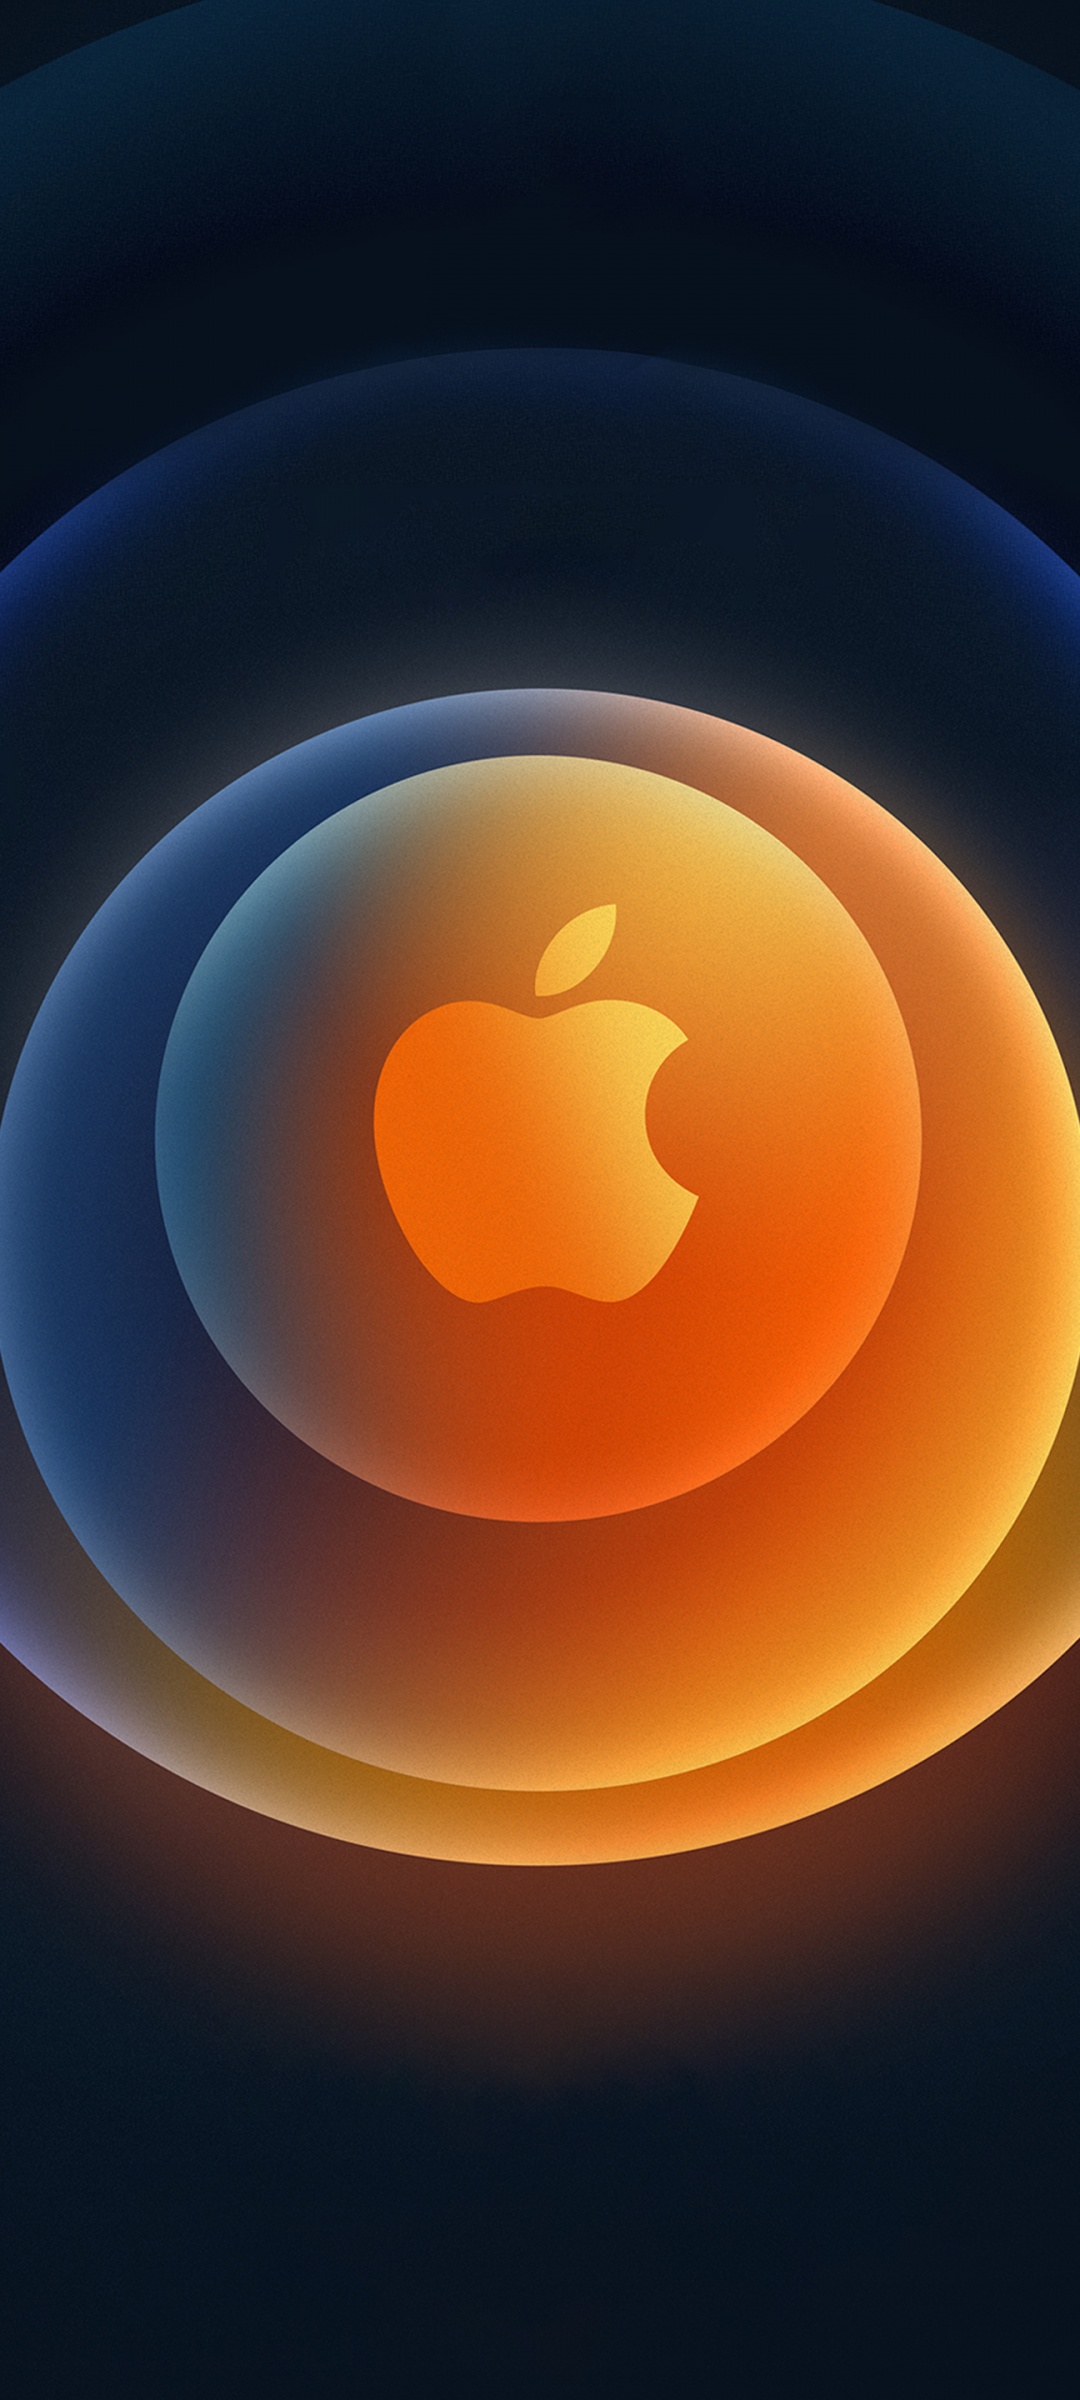 iPhone X/11 Apple logo wallpaper | Fundos de tela iphone, Imagens apple,  Papel de parede smartphone